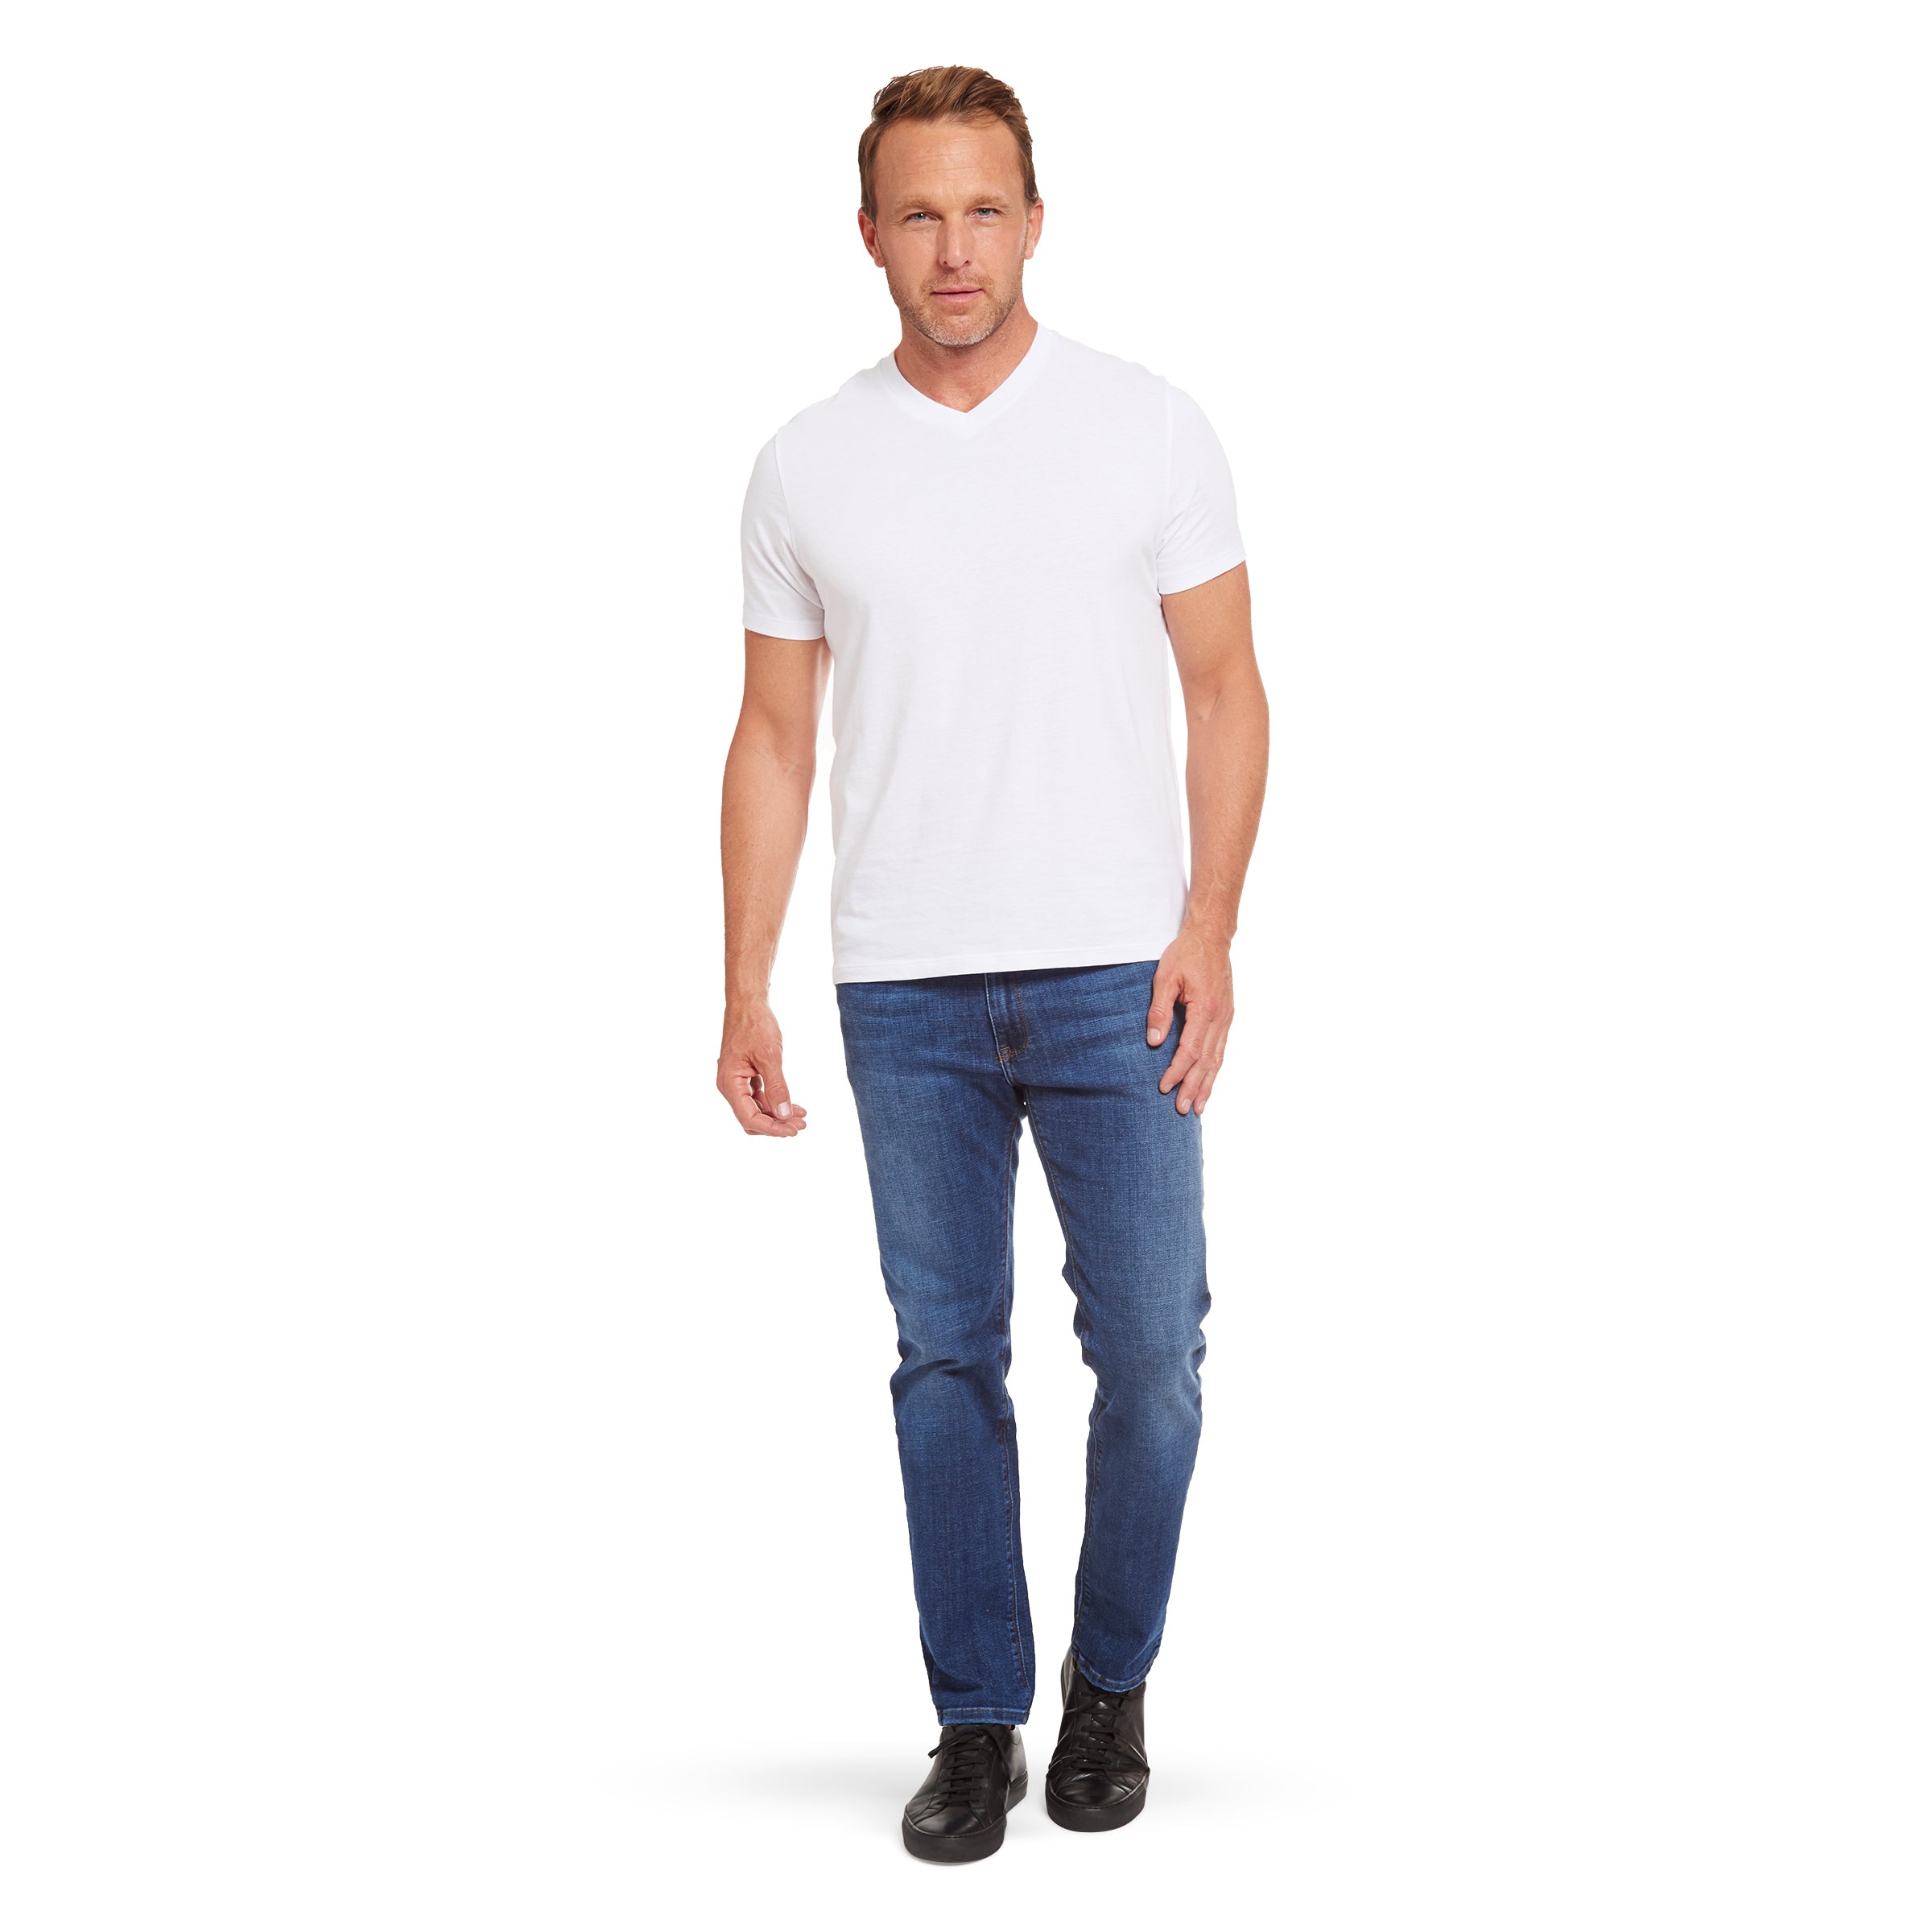 Men wearing Azul medio/claro Slim Wooster Jeans